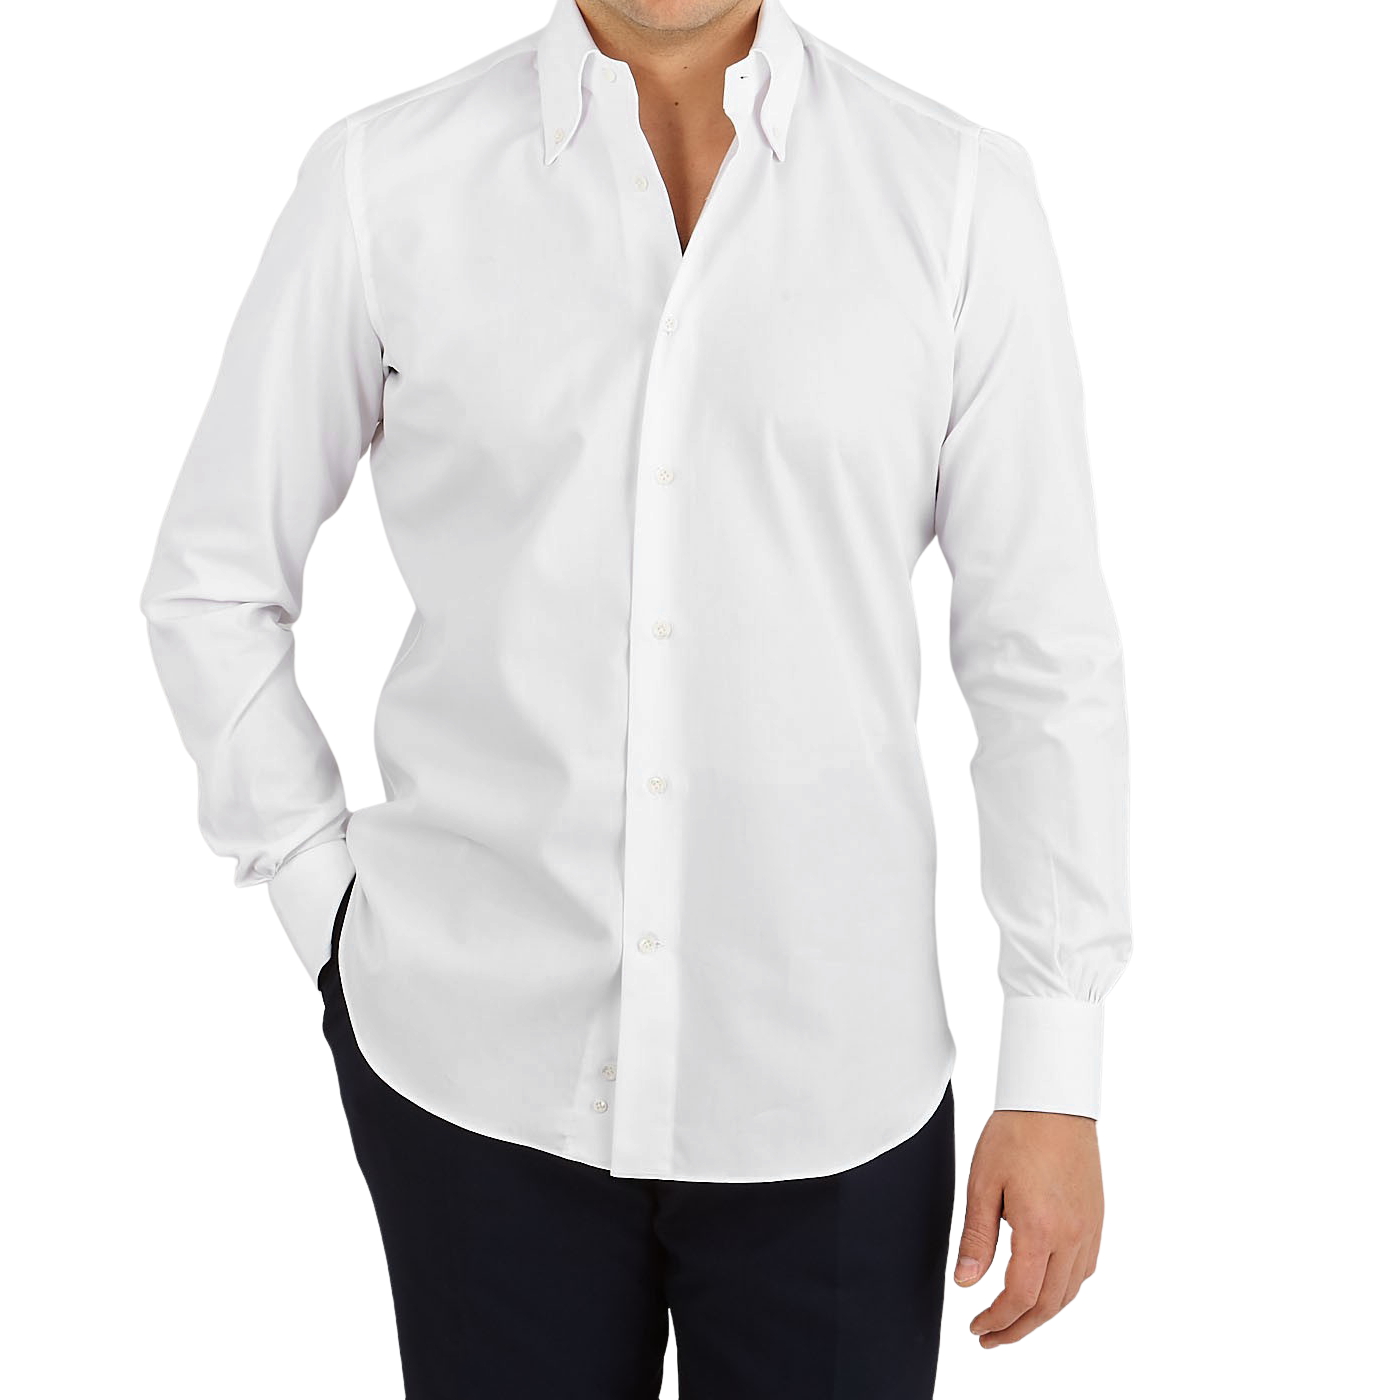 Mazzarelli White Royal Oxford BD Regular Shirt Front